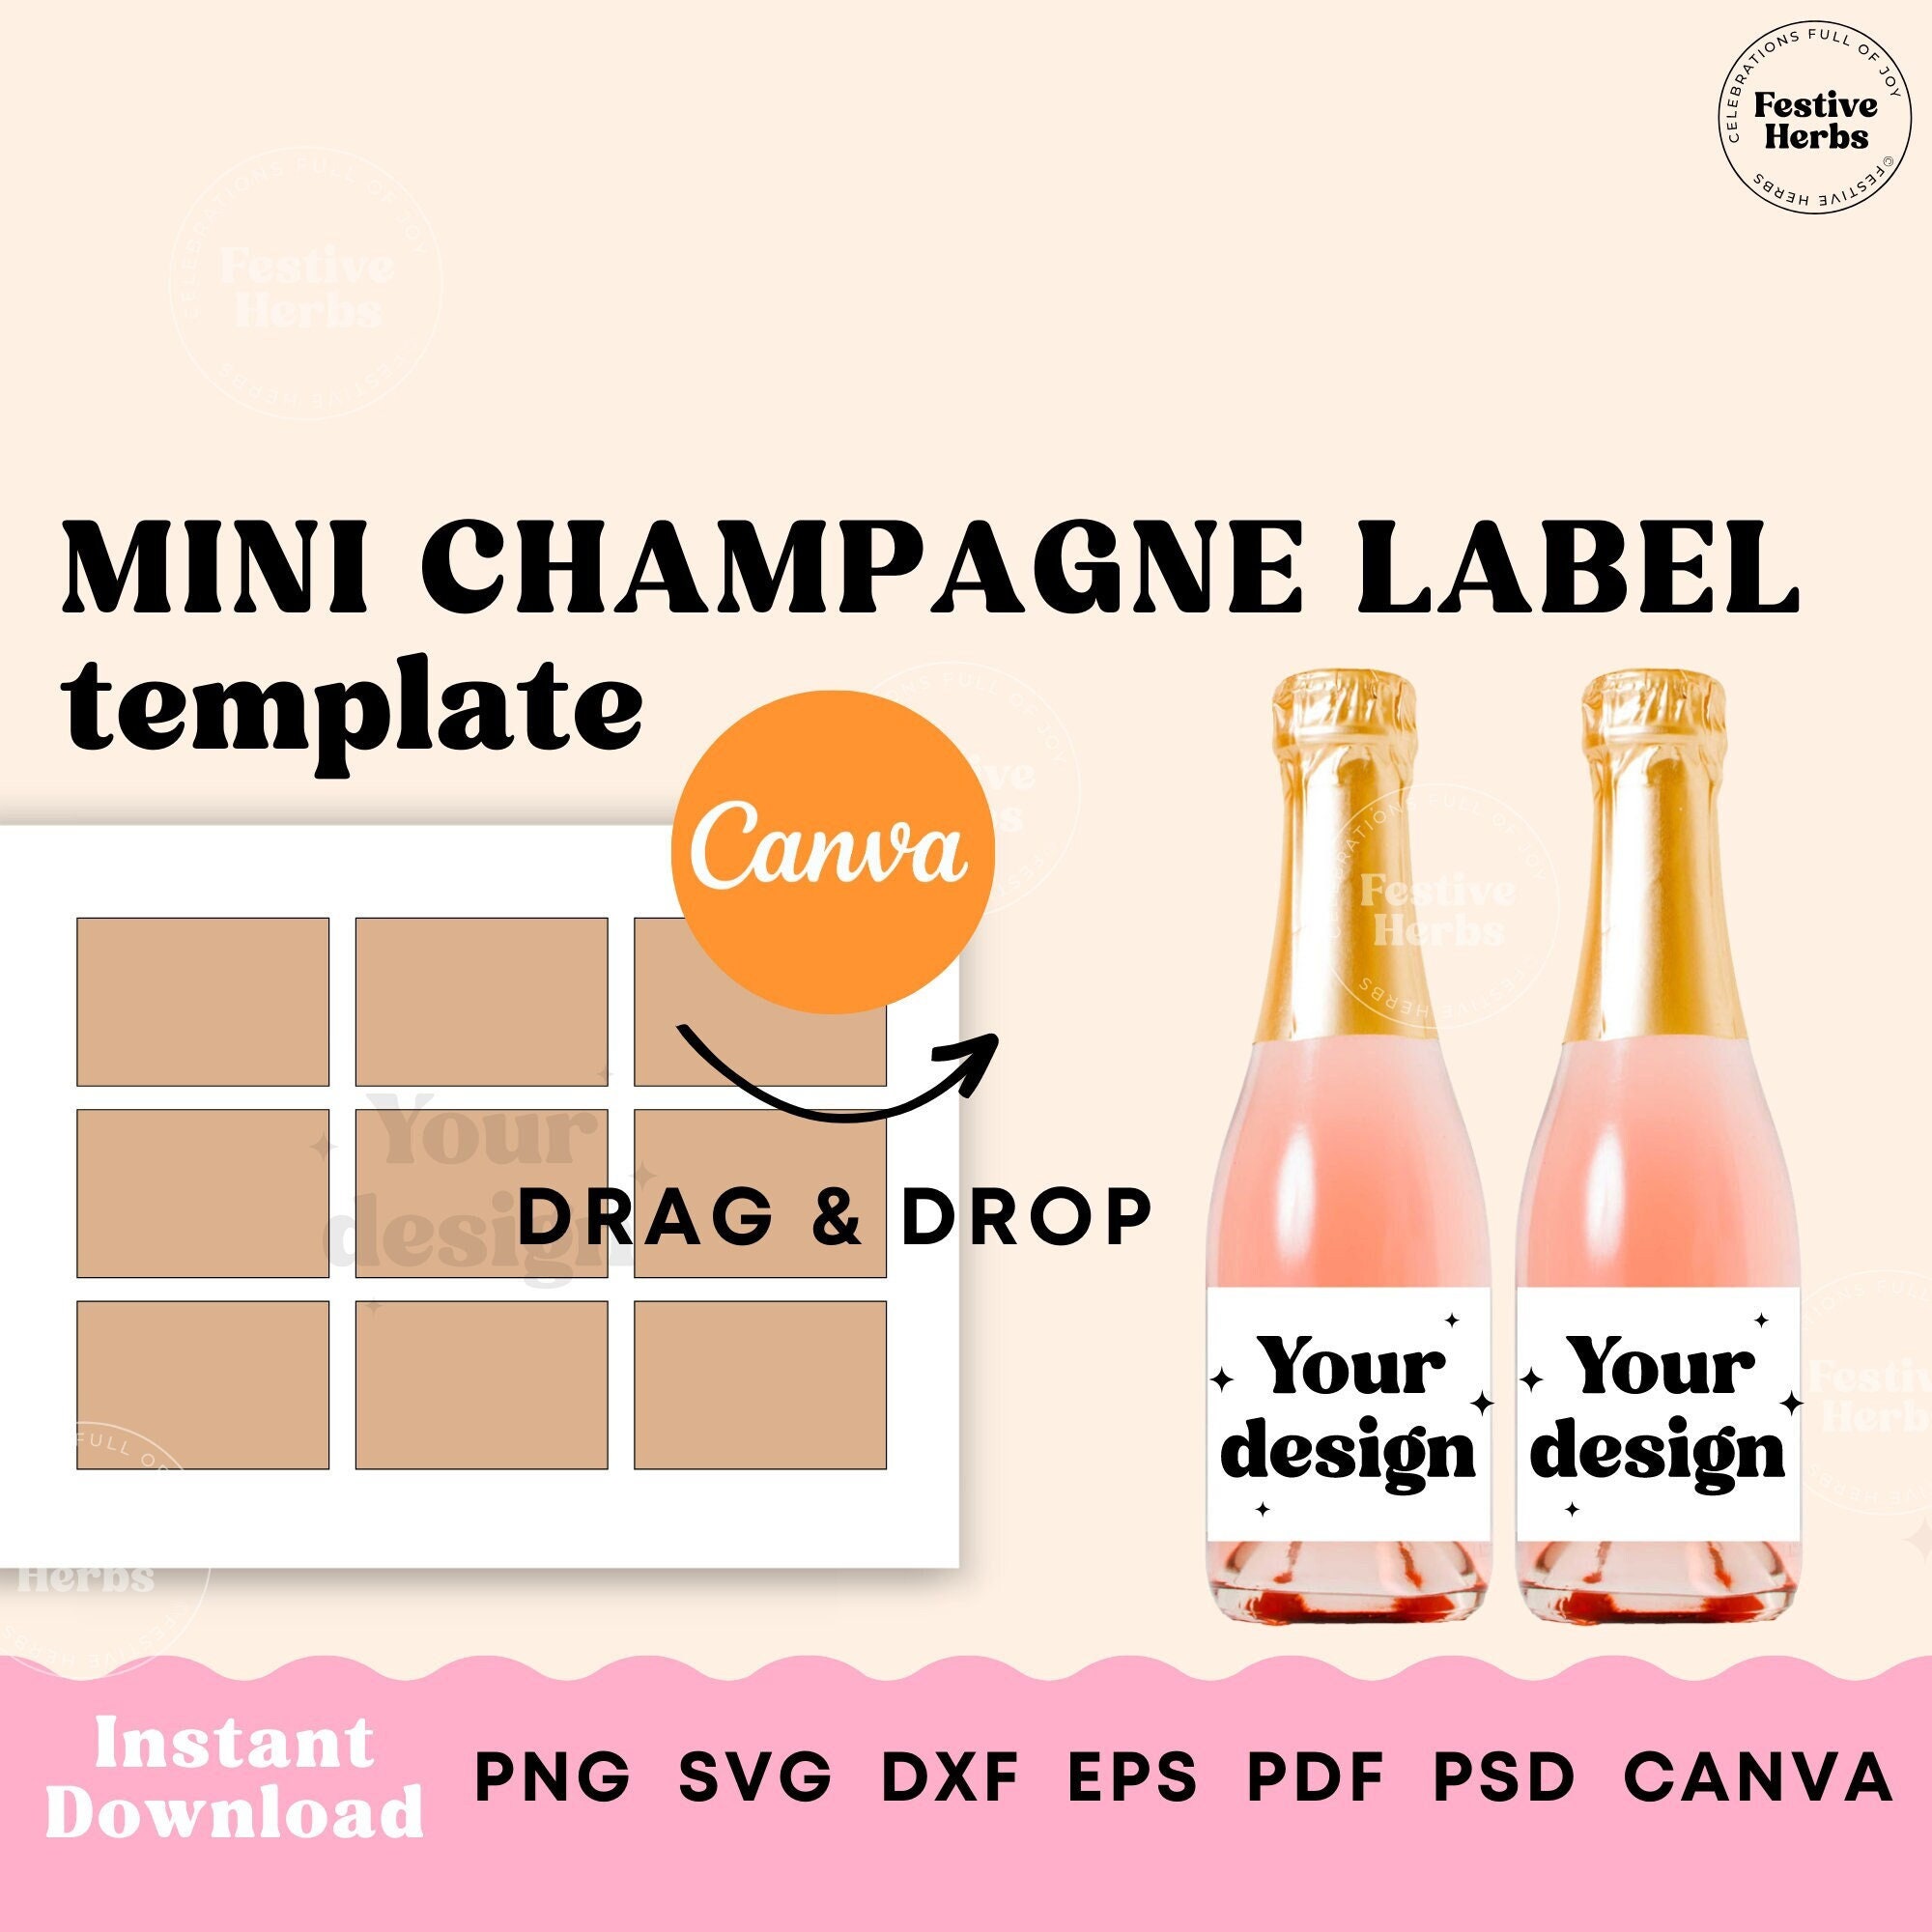 Moet & Chandon Nectar Imperial Rose Champagne Bottle Label, Champagne PNG,  Sublimation, Printable, Waterslide, Front Label, Neck Label